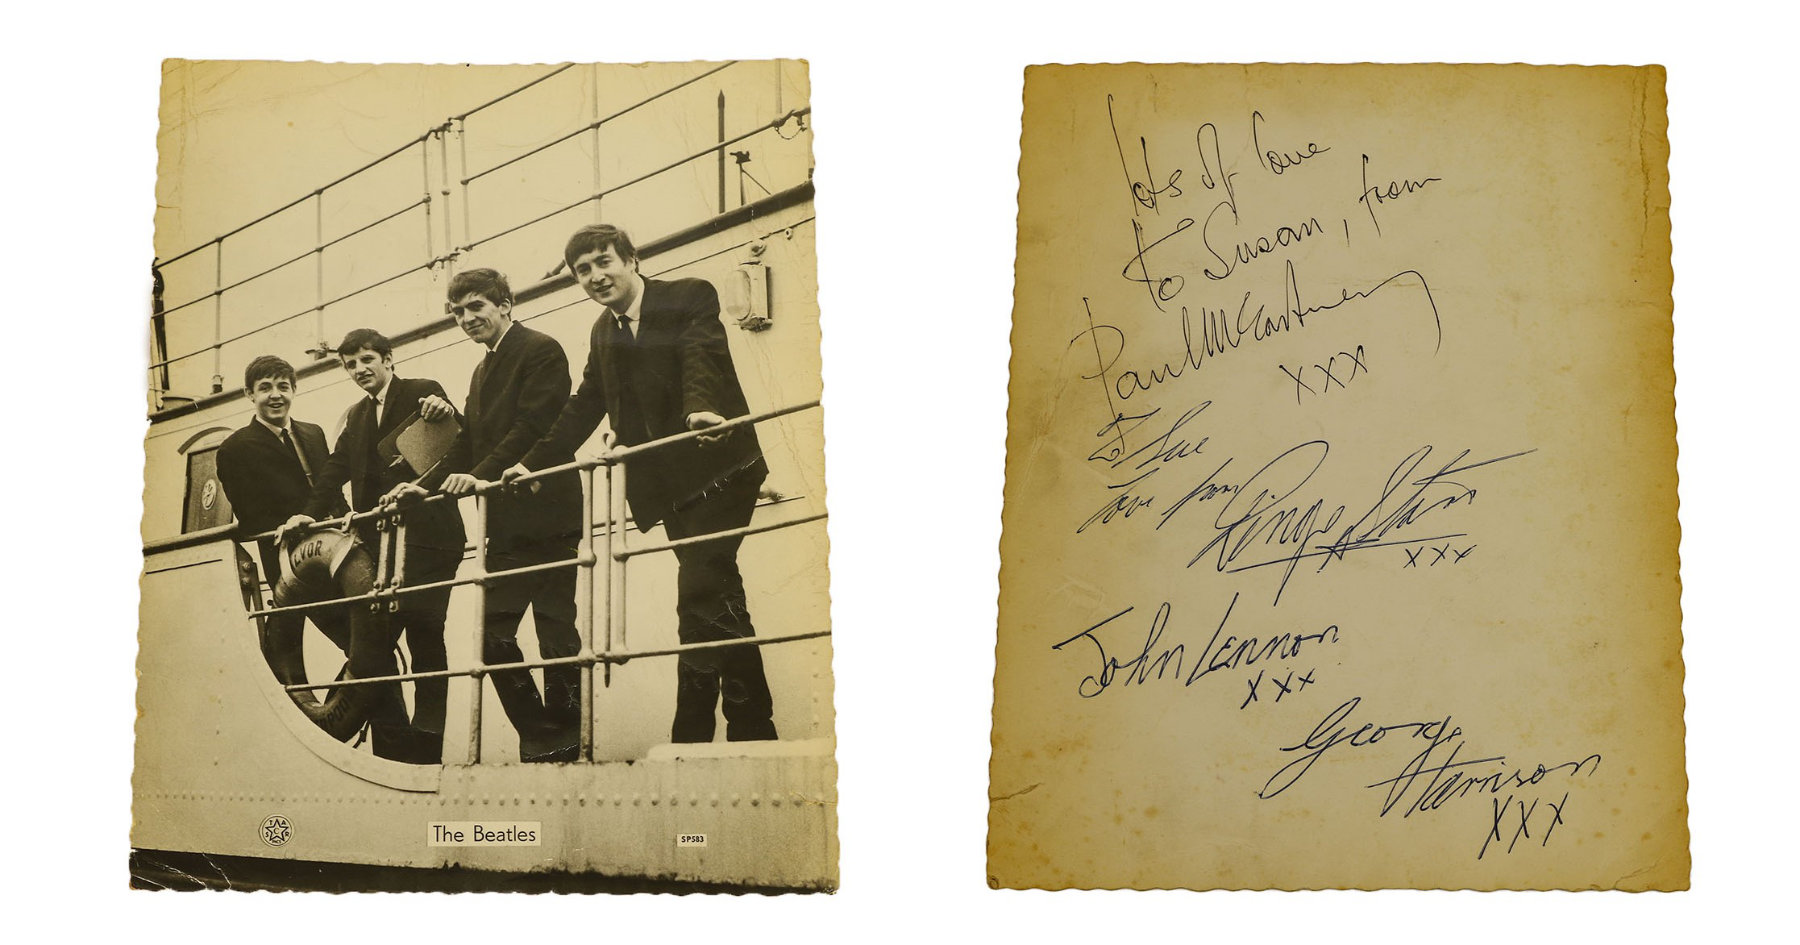 Paul McCartney & Ringo Starr Autographs – Sold for £950